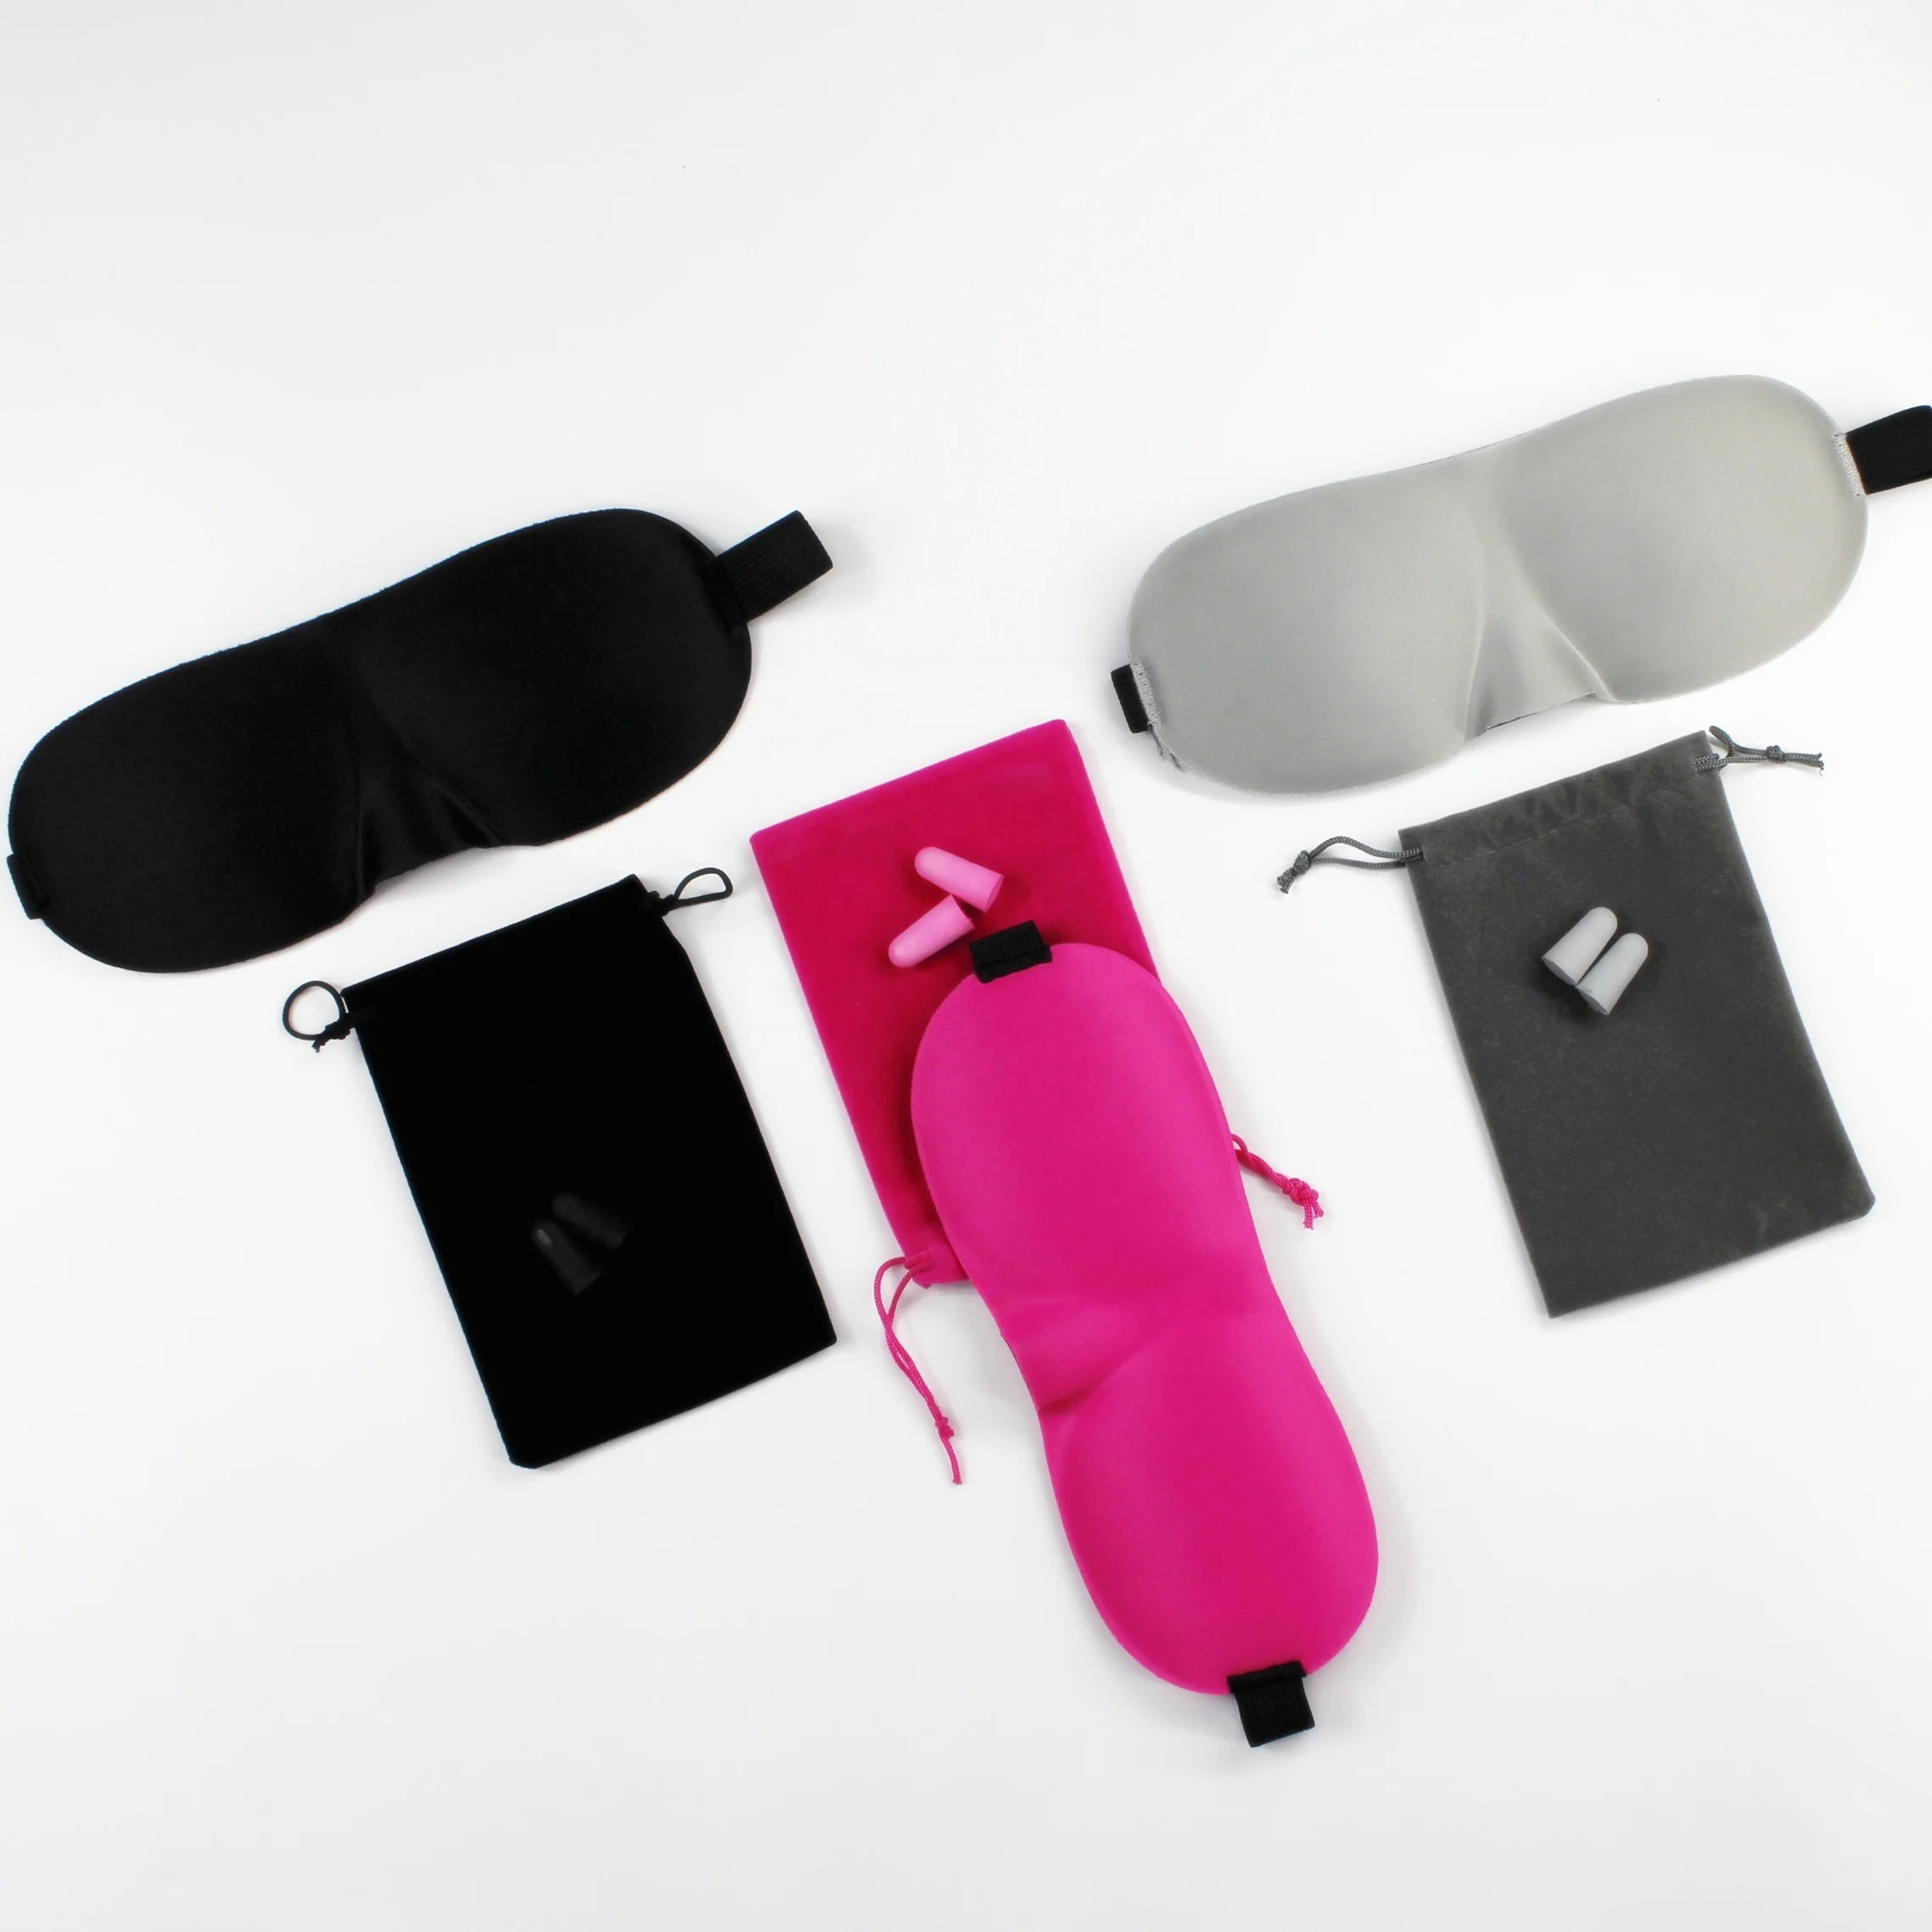 

EASETRIP sleep travel kit 3D sleepmask soft sleep eye mask comfortable Blindfold eyemask with ear plug set, Black ,pink ,grey